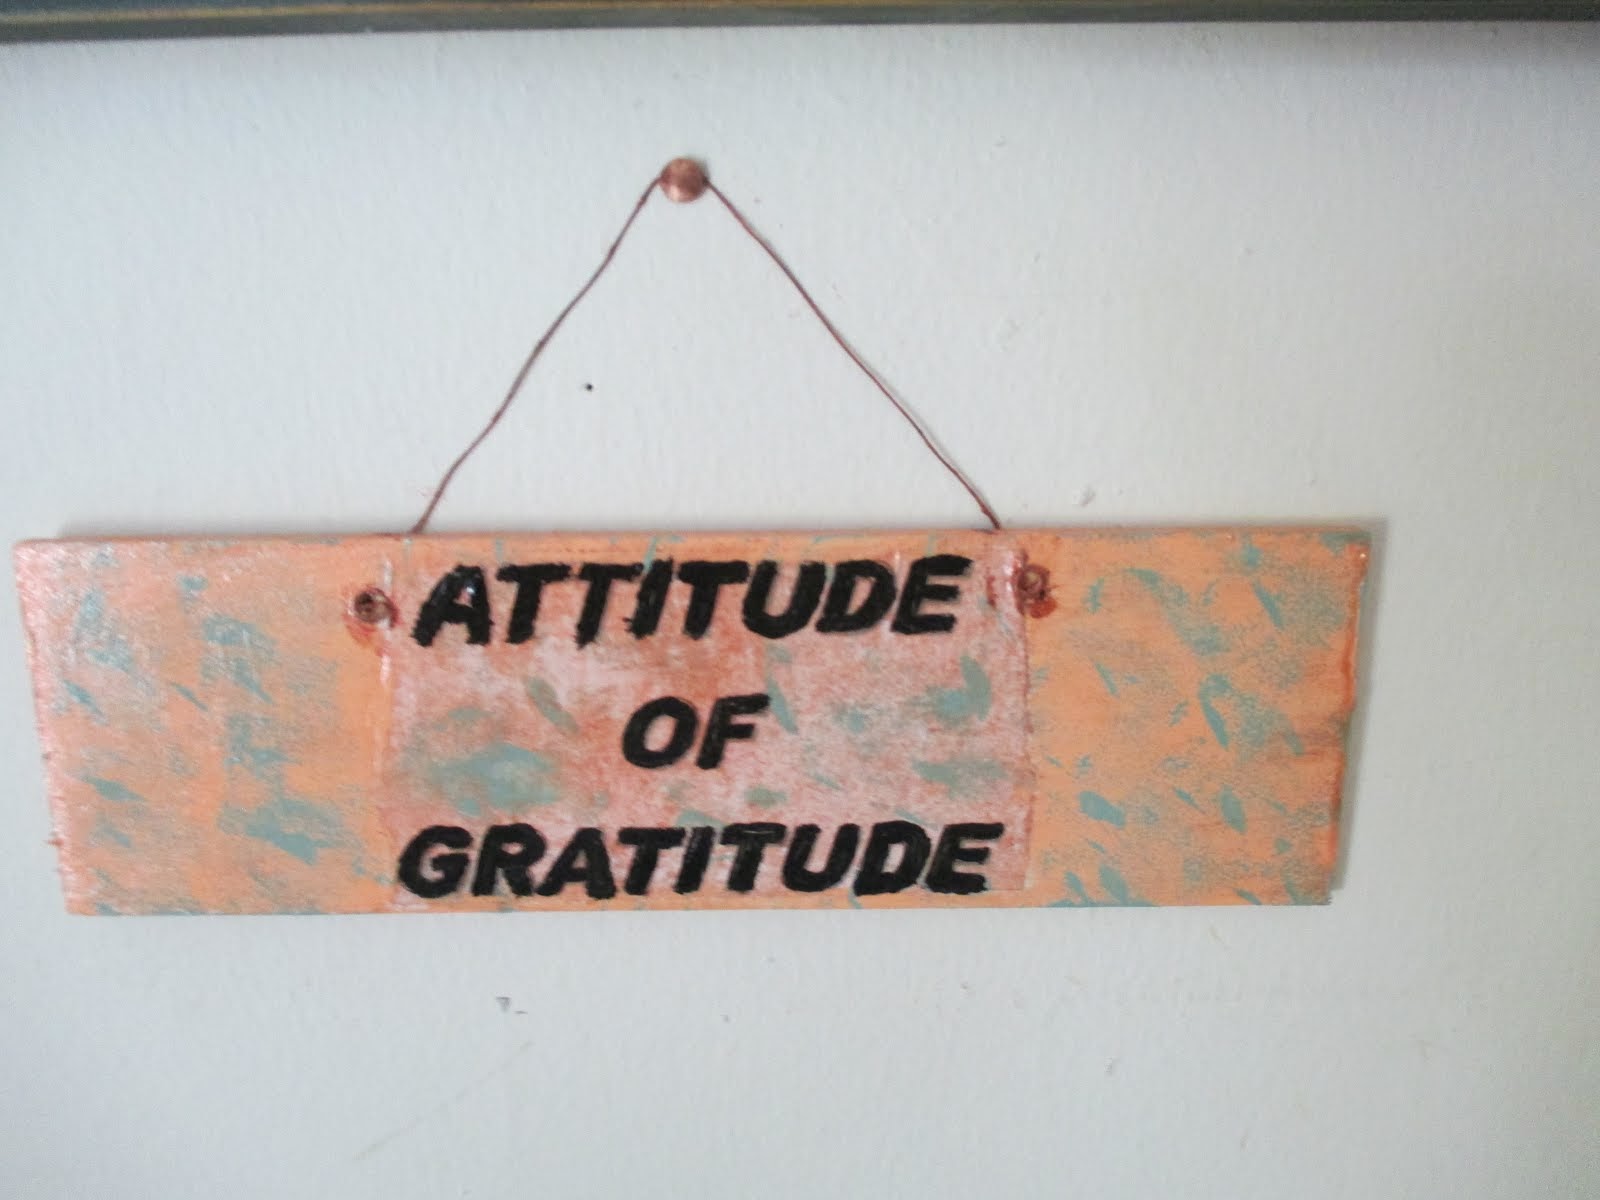 Let's have an attitude of gratitude!